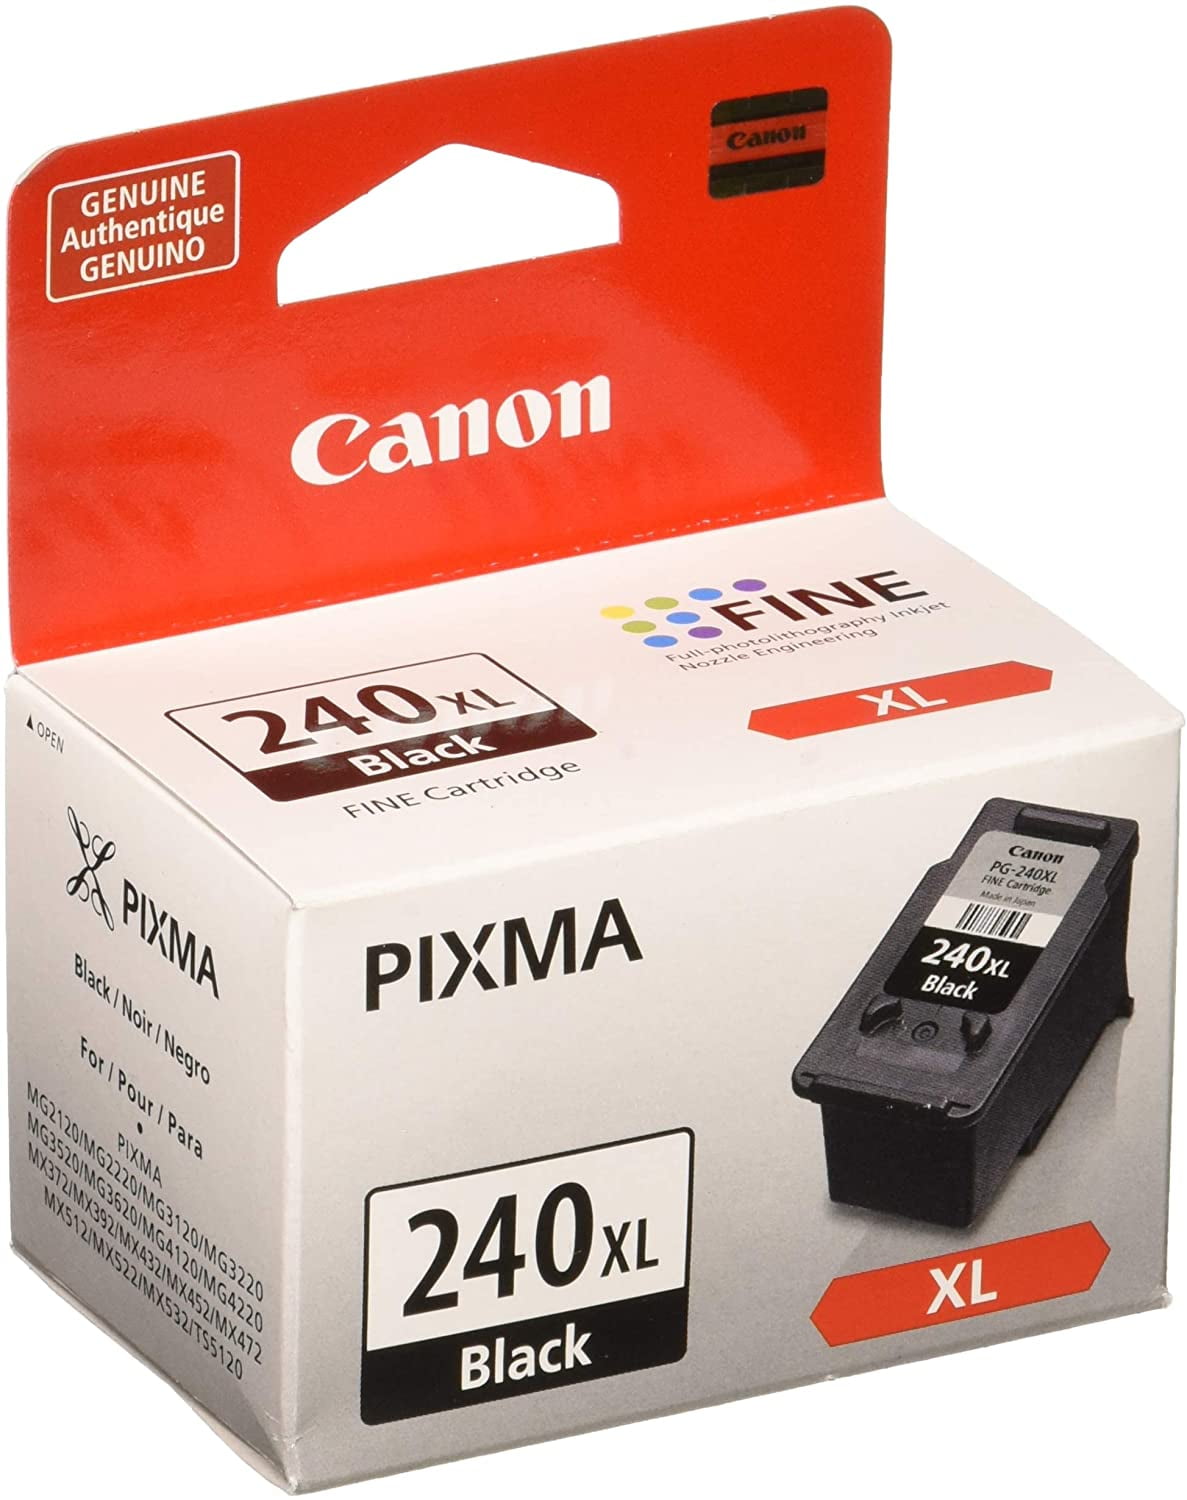 ejet Remanufactured 240XL Ink Cartridge Replacement for Canon PG-240XL 240 XL for Pixma MG3620 MG2120 MG3520 TS5120 MX452 MX512 MX532 MX472 MG3120 MG3122 MG4120 MX432 MX439 Printer High Yield 2 Black 